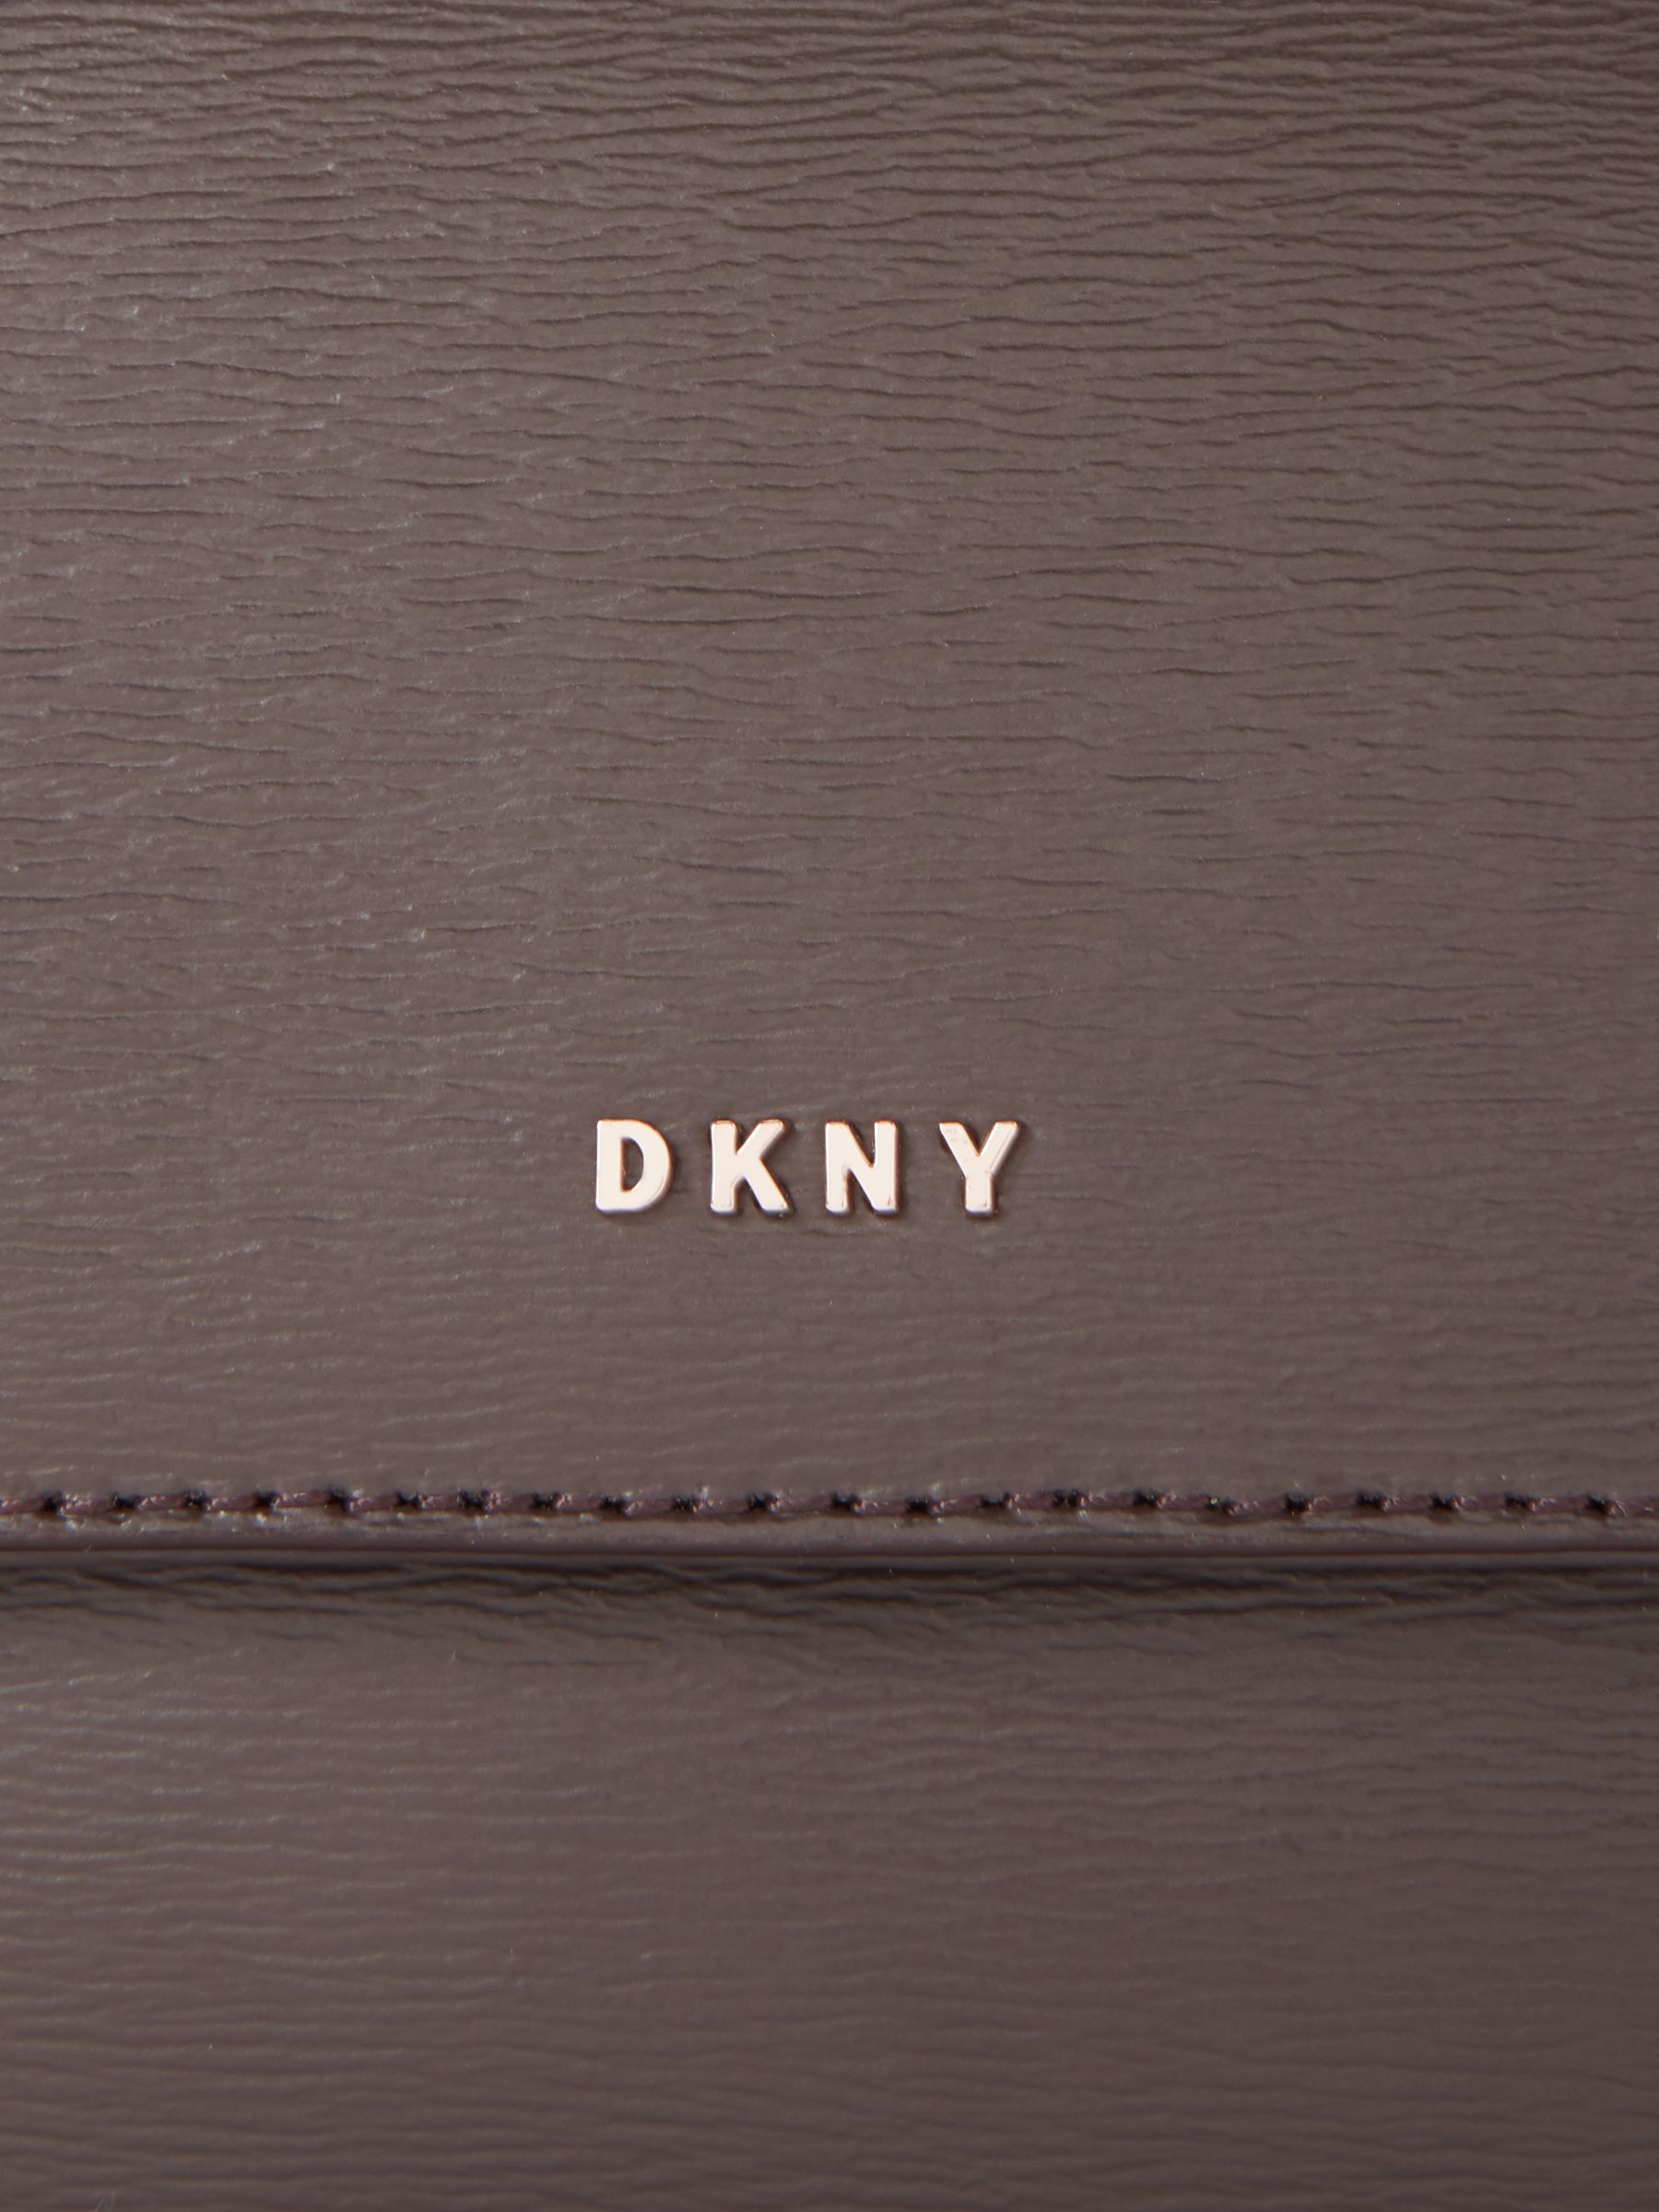 DKNY Bryant Leather Medium Flap Cross Body Bag, Dark Chocolate